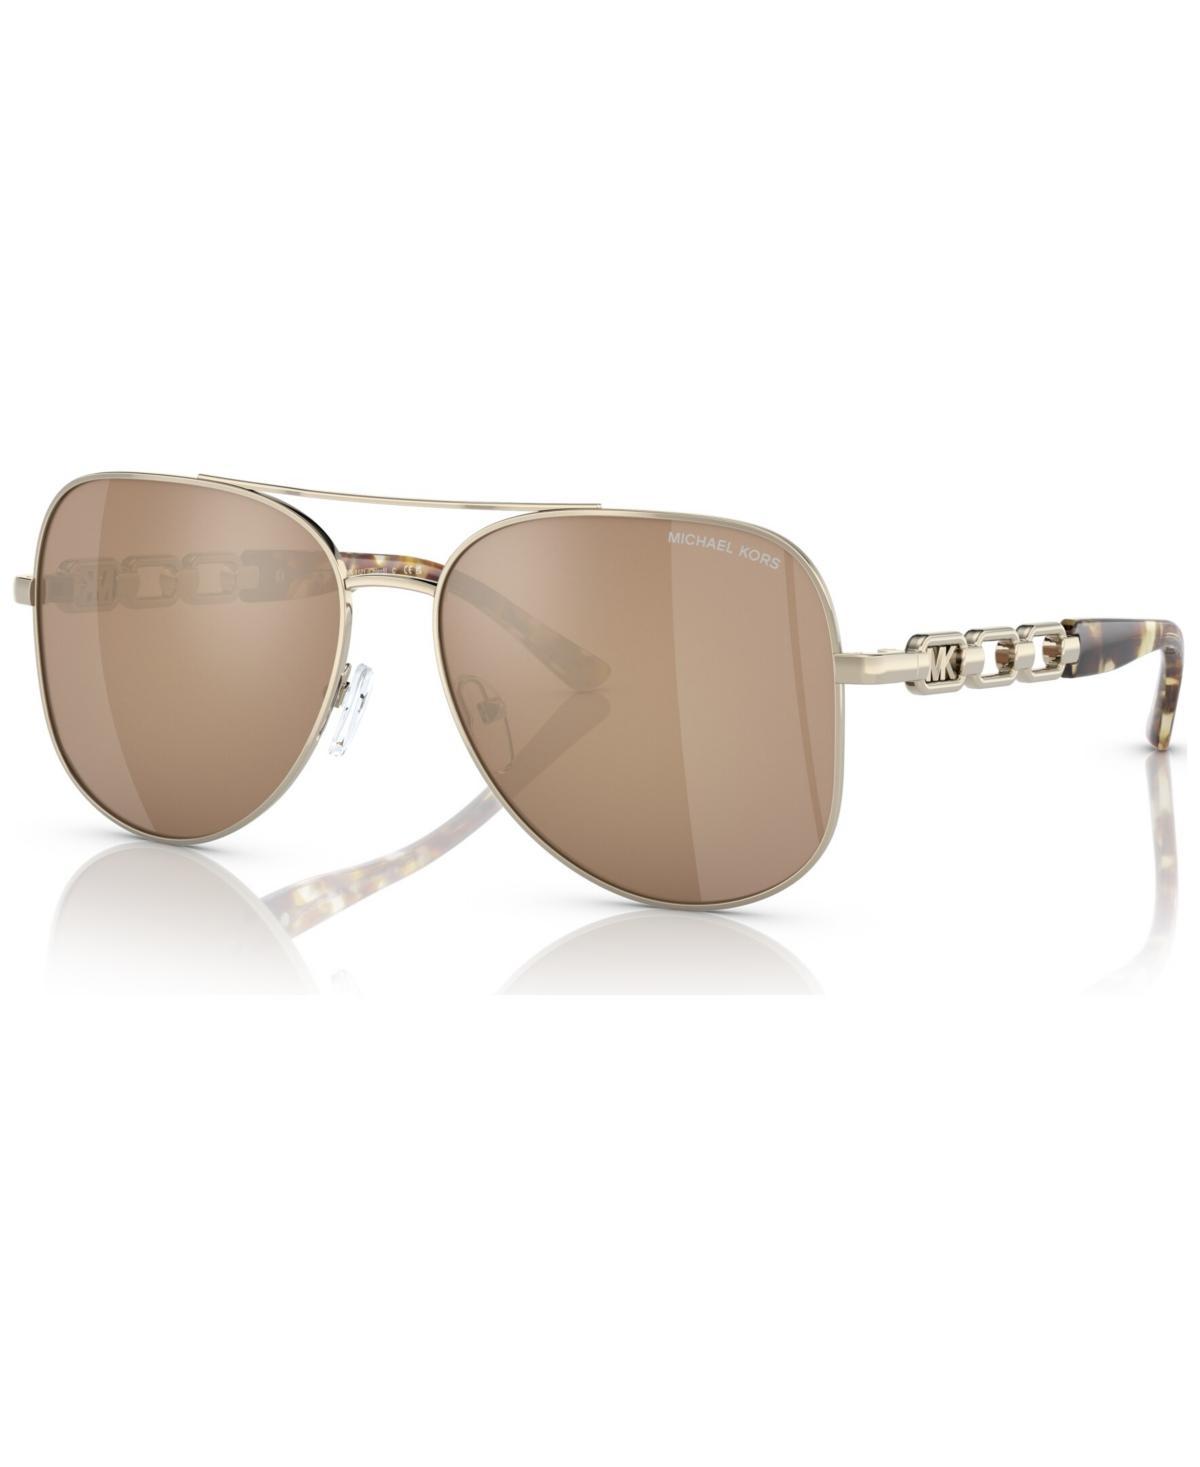 Michael Kors Chianti 58mm Aviator Sunglasses Product Image